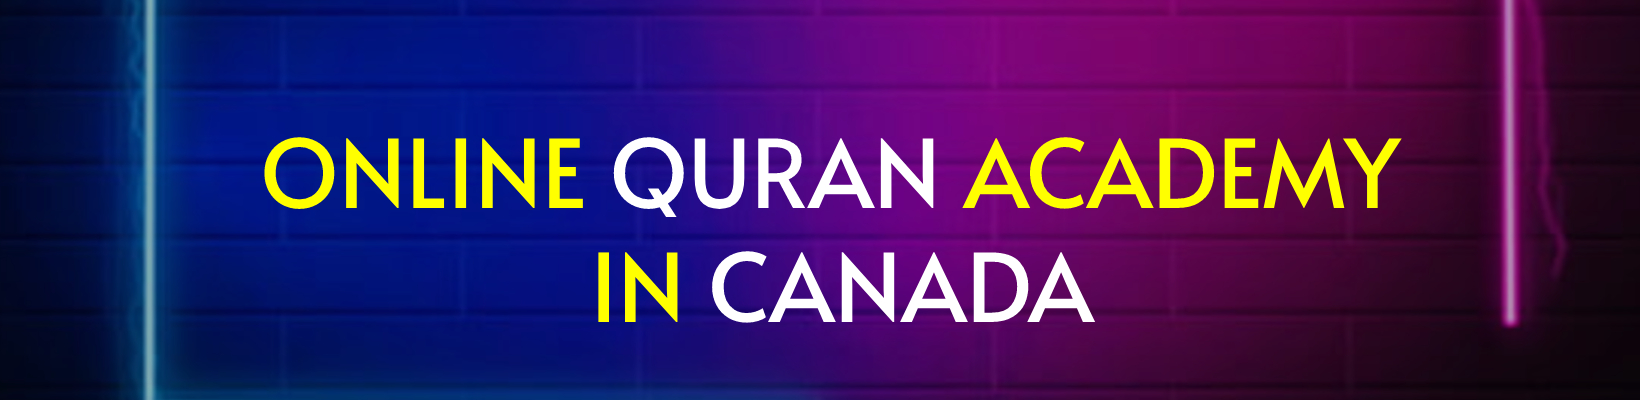 Online Quran Academy in Canada